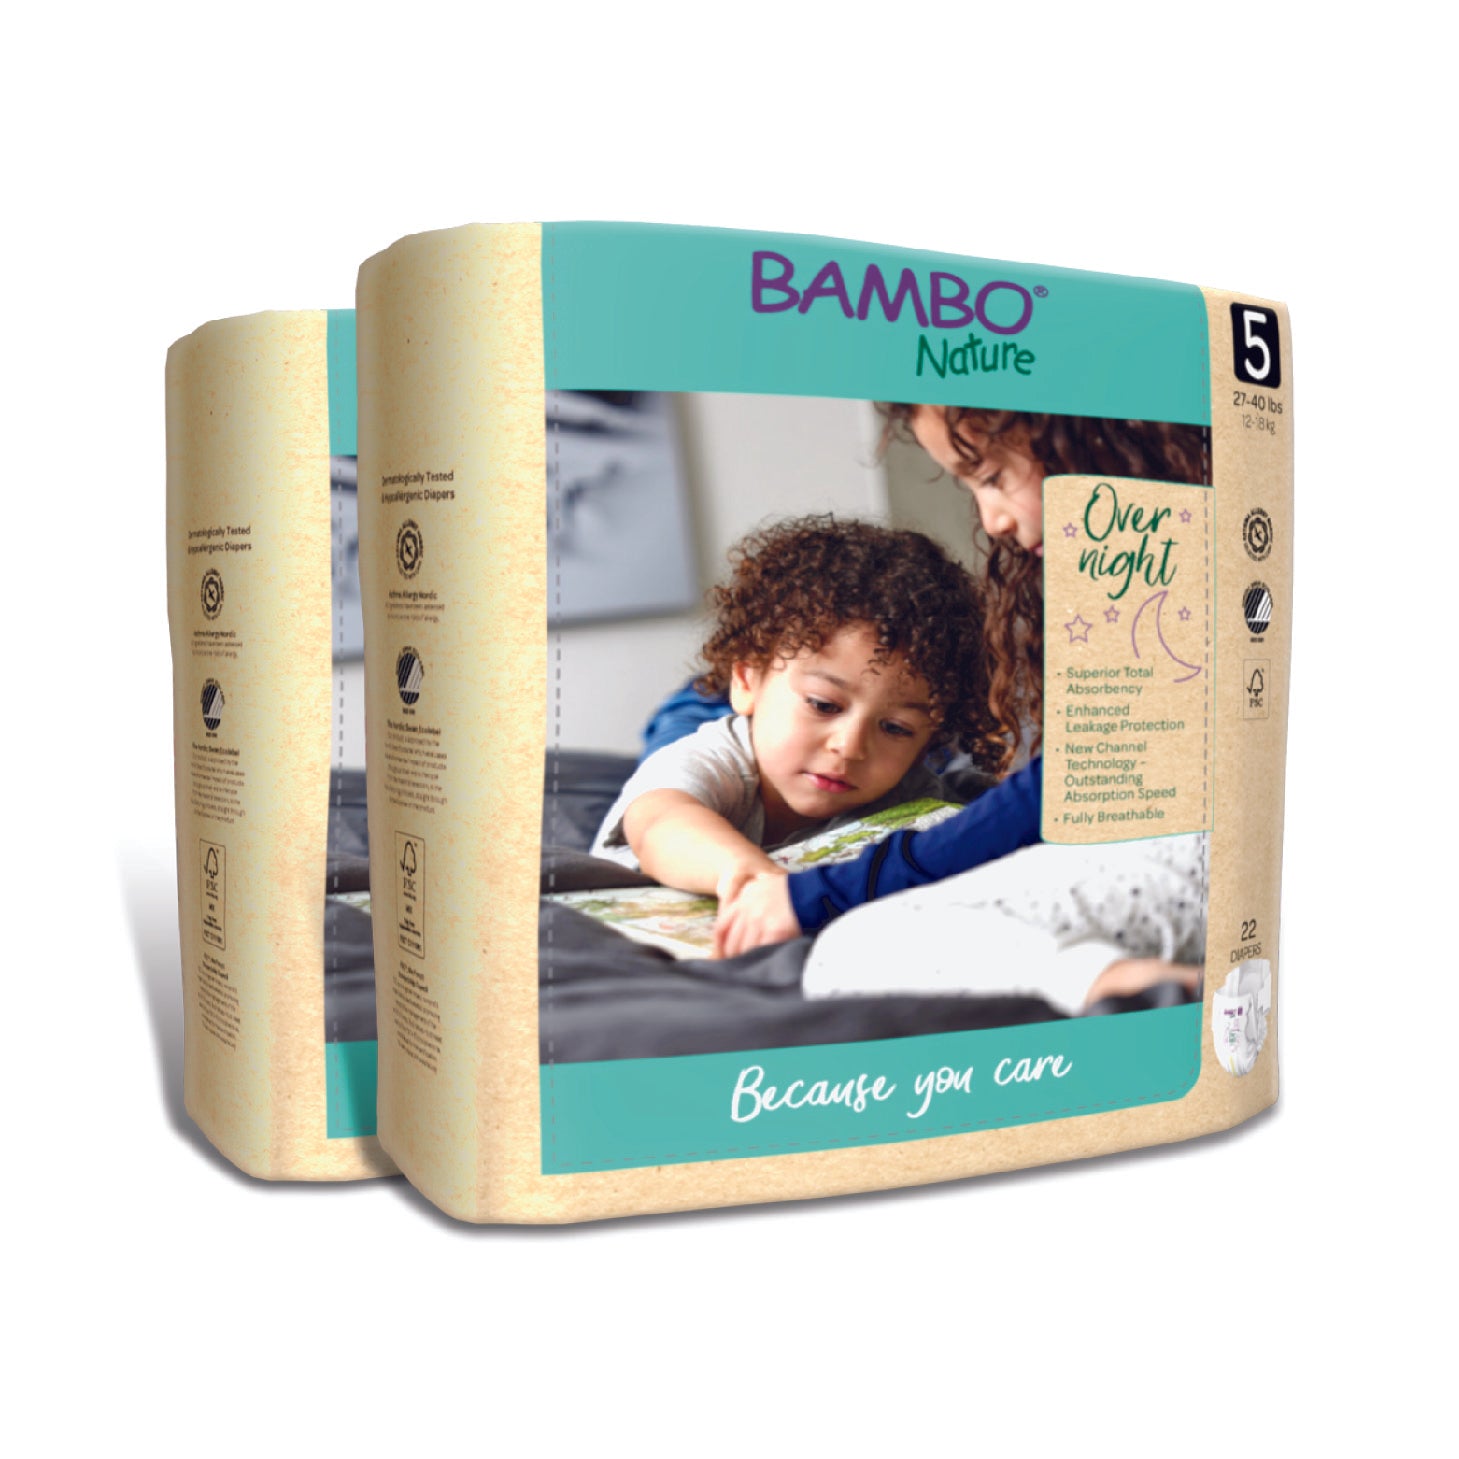 Overnight Diapers – Bambo Nature USA